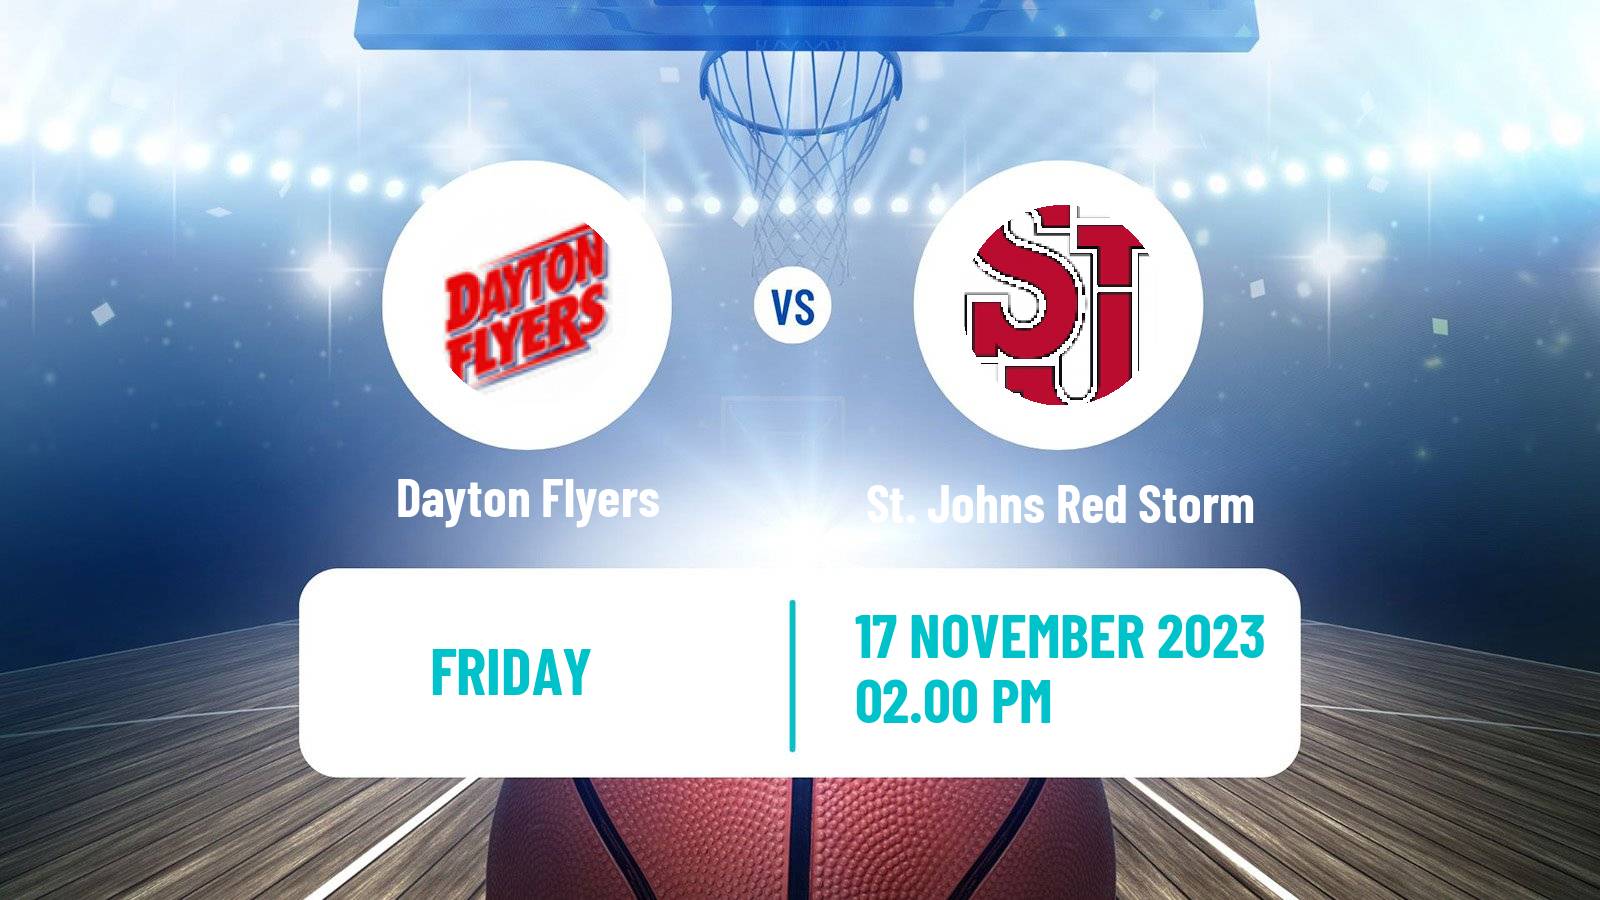 Basketball NCAA College Basketball Dayton Flyers - St. Johns Red Storm